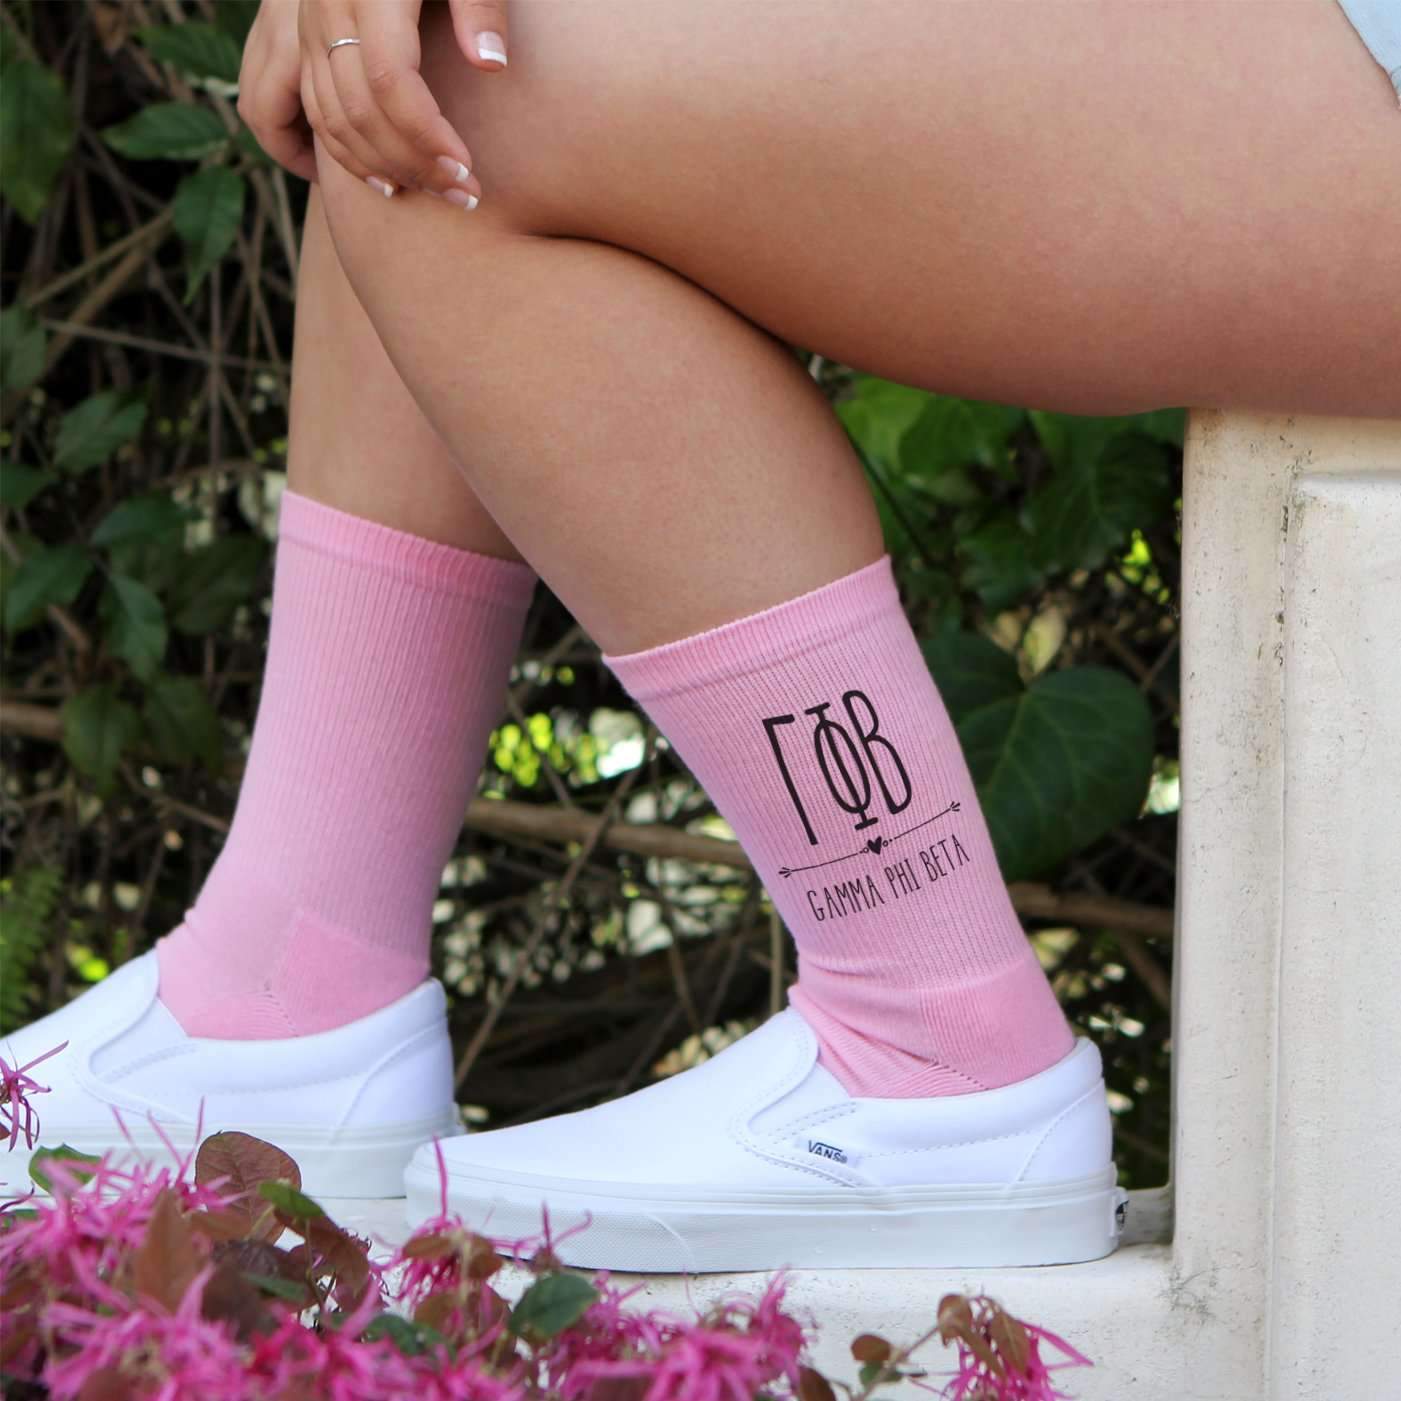 Gamma Phi Beta sorority name and letters custom printed on pink cotton crew socks